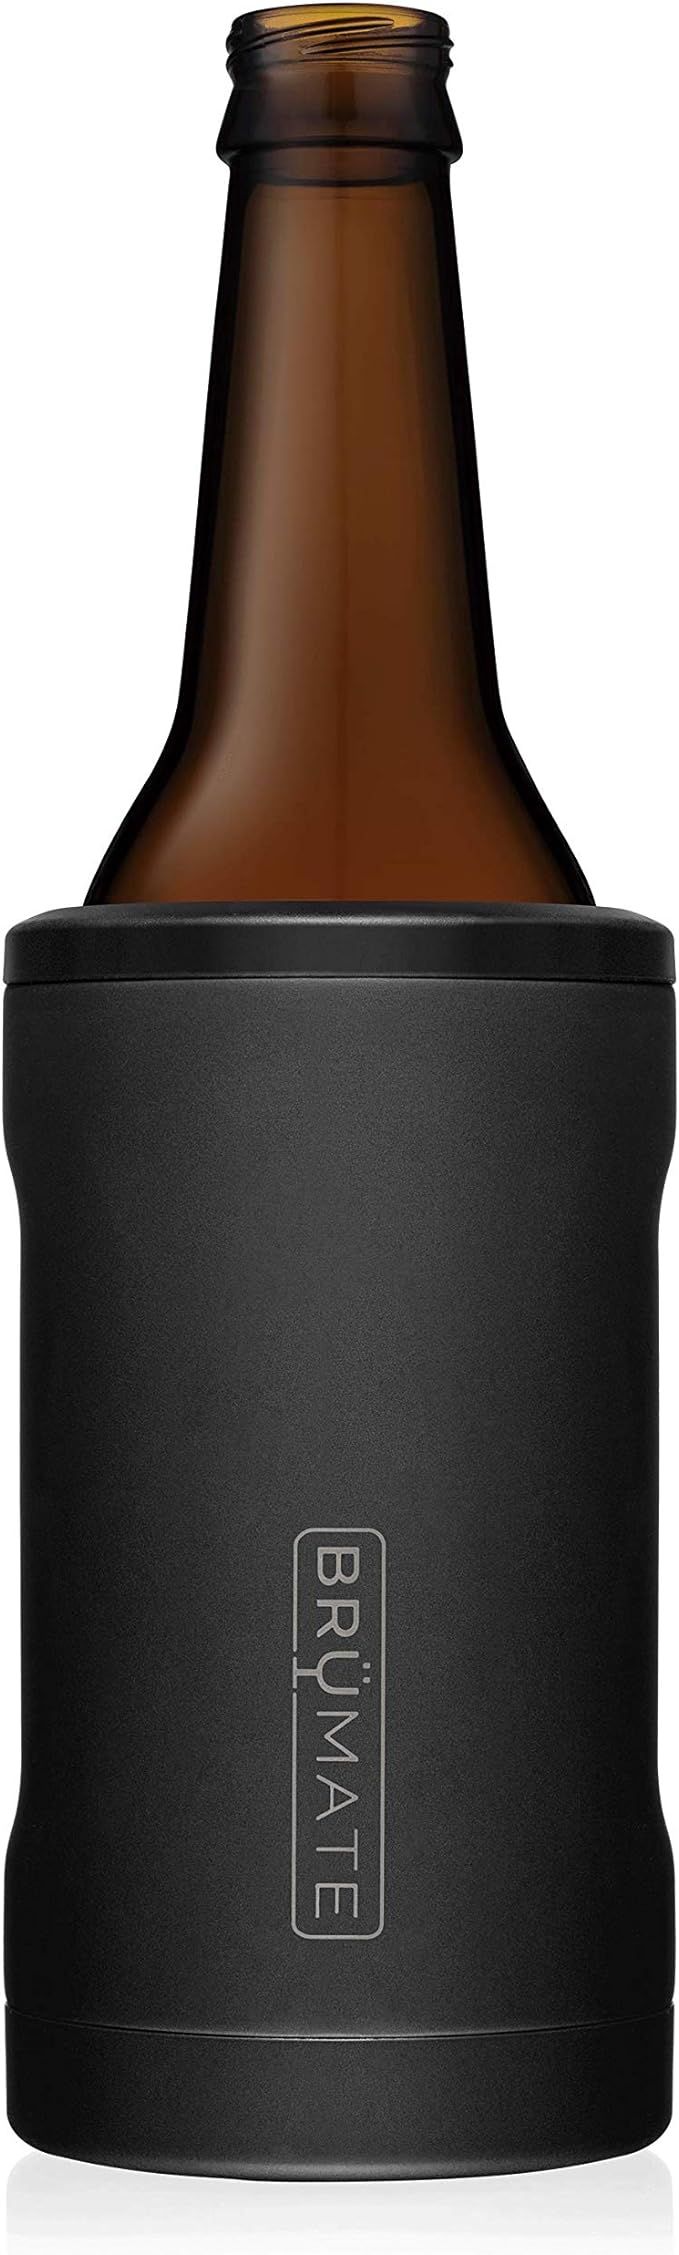 BrüMate Hopsulator BOTT'L Double-walled Stainless Steel Insulated Bottle Cooler for 12 Oz Bottle... | Amazon (US)